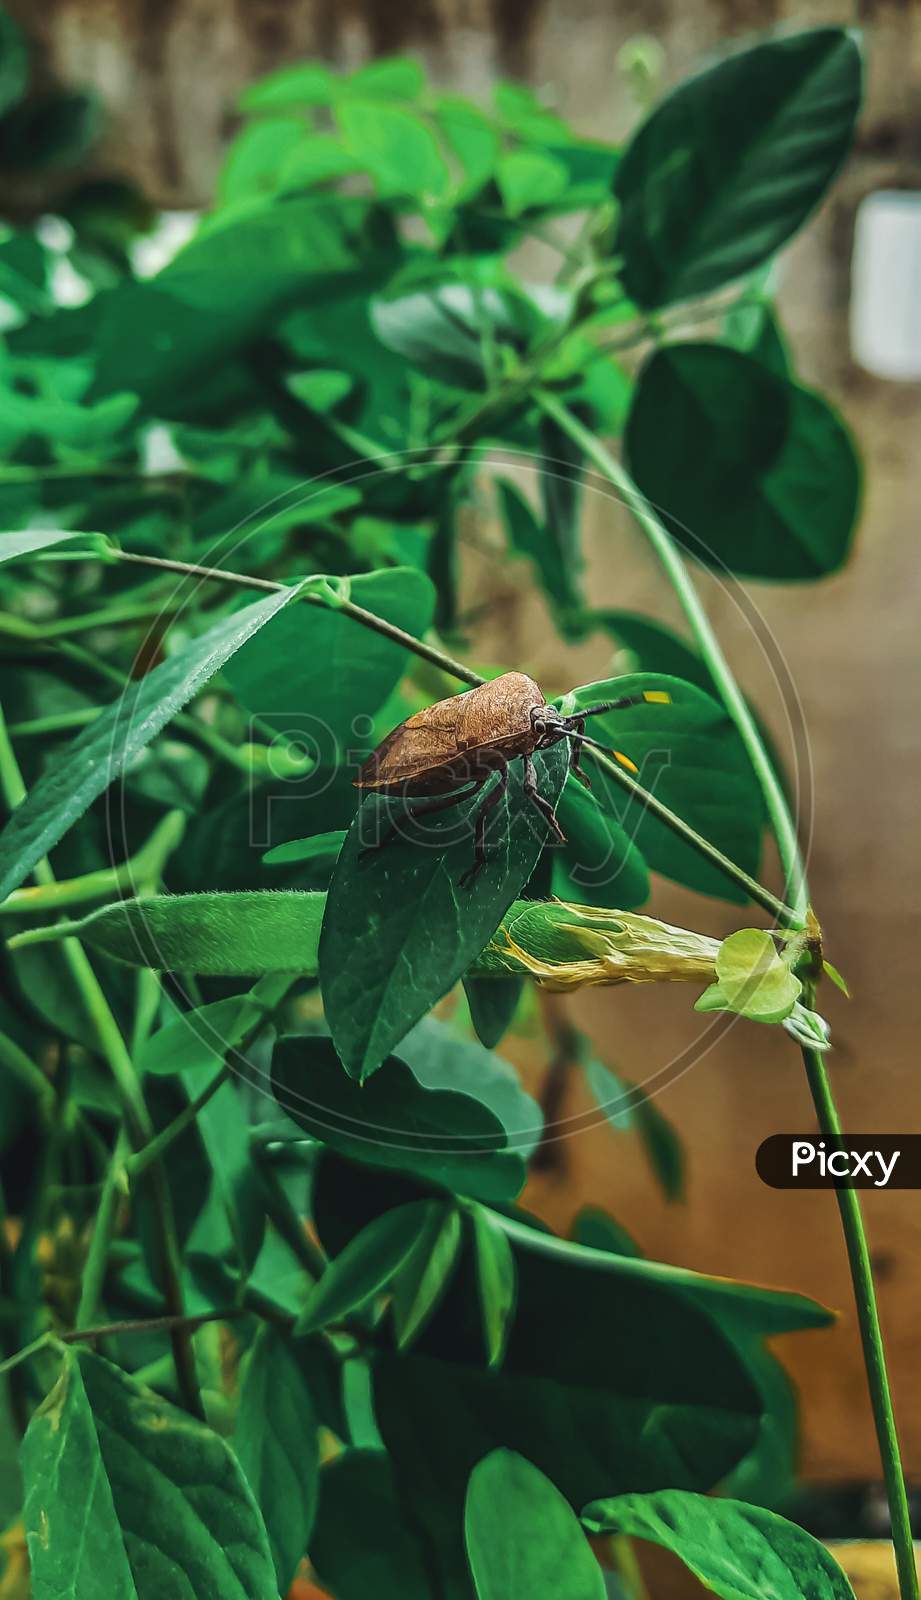 Bug on a leaf, macro photography